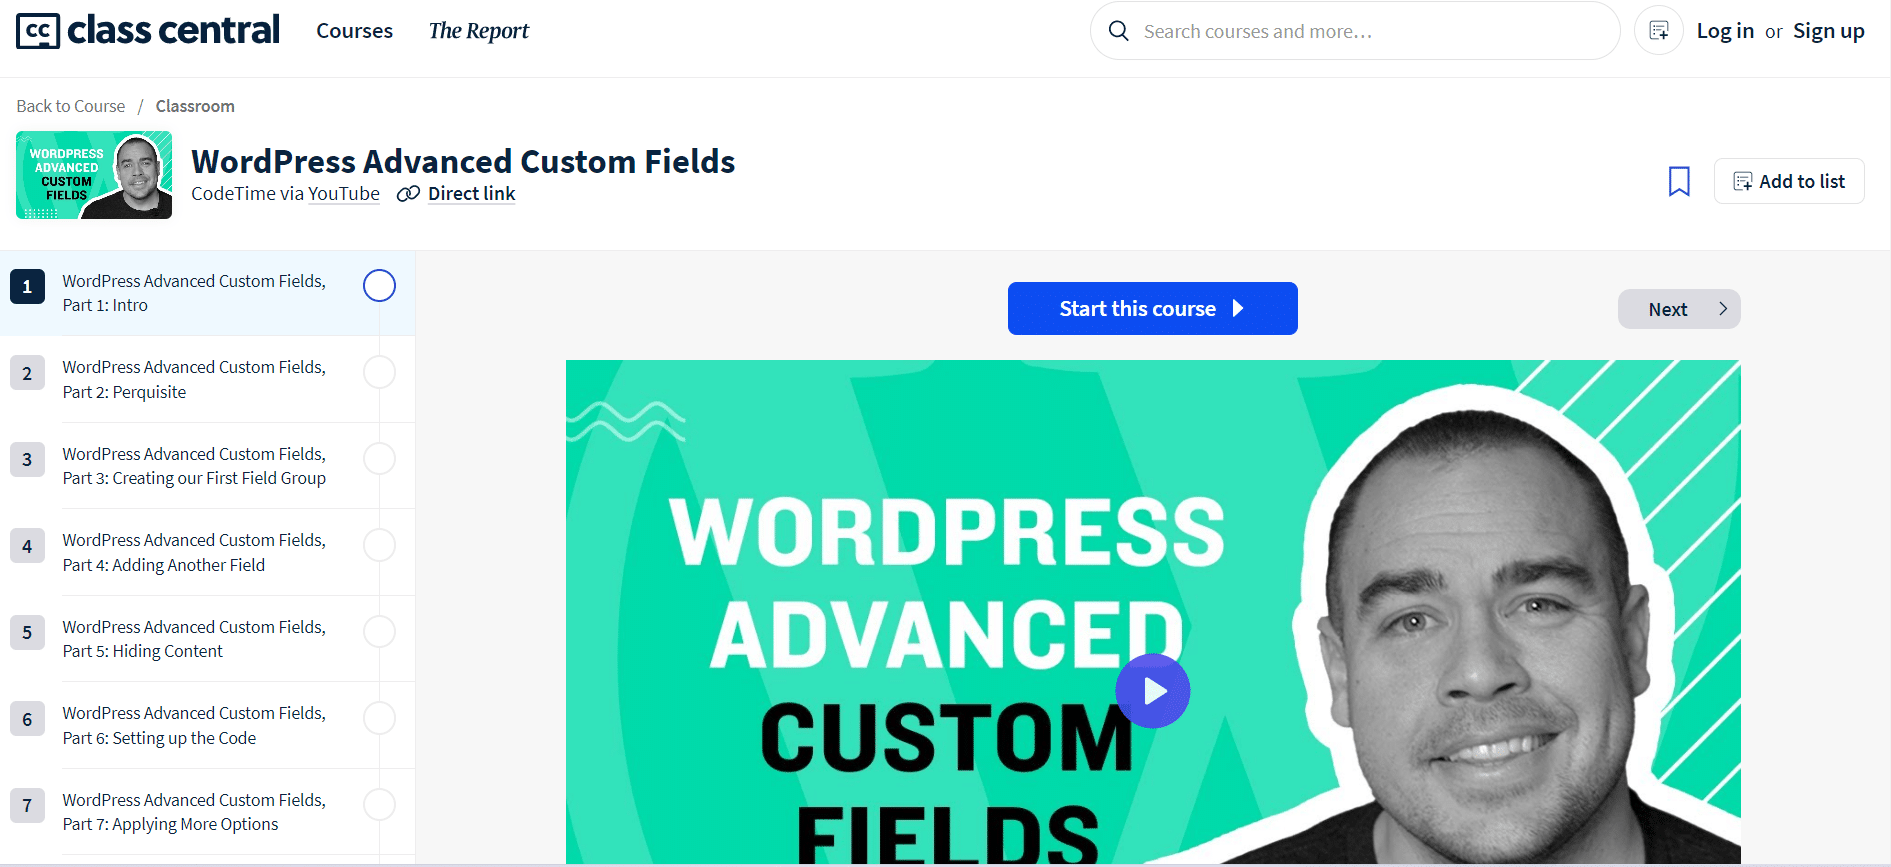 WordPress Advanced Custom Fields